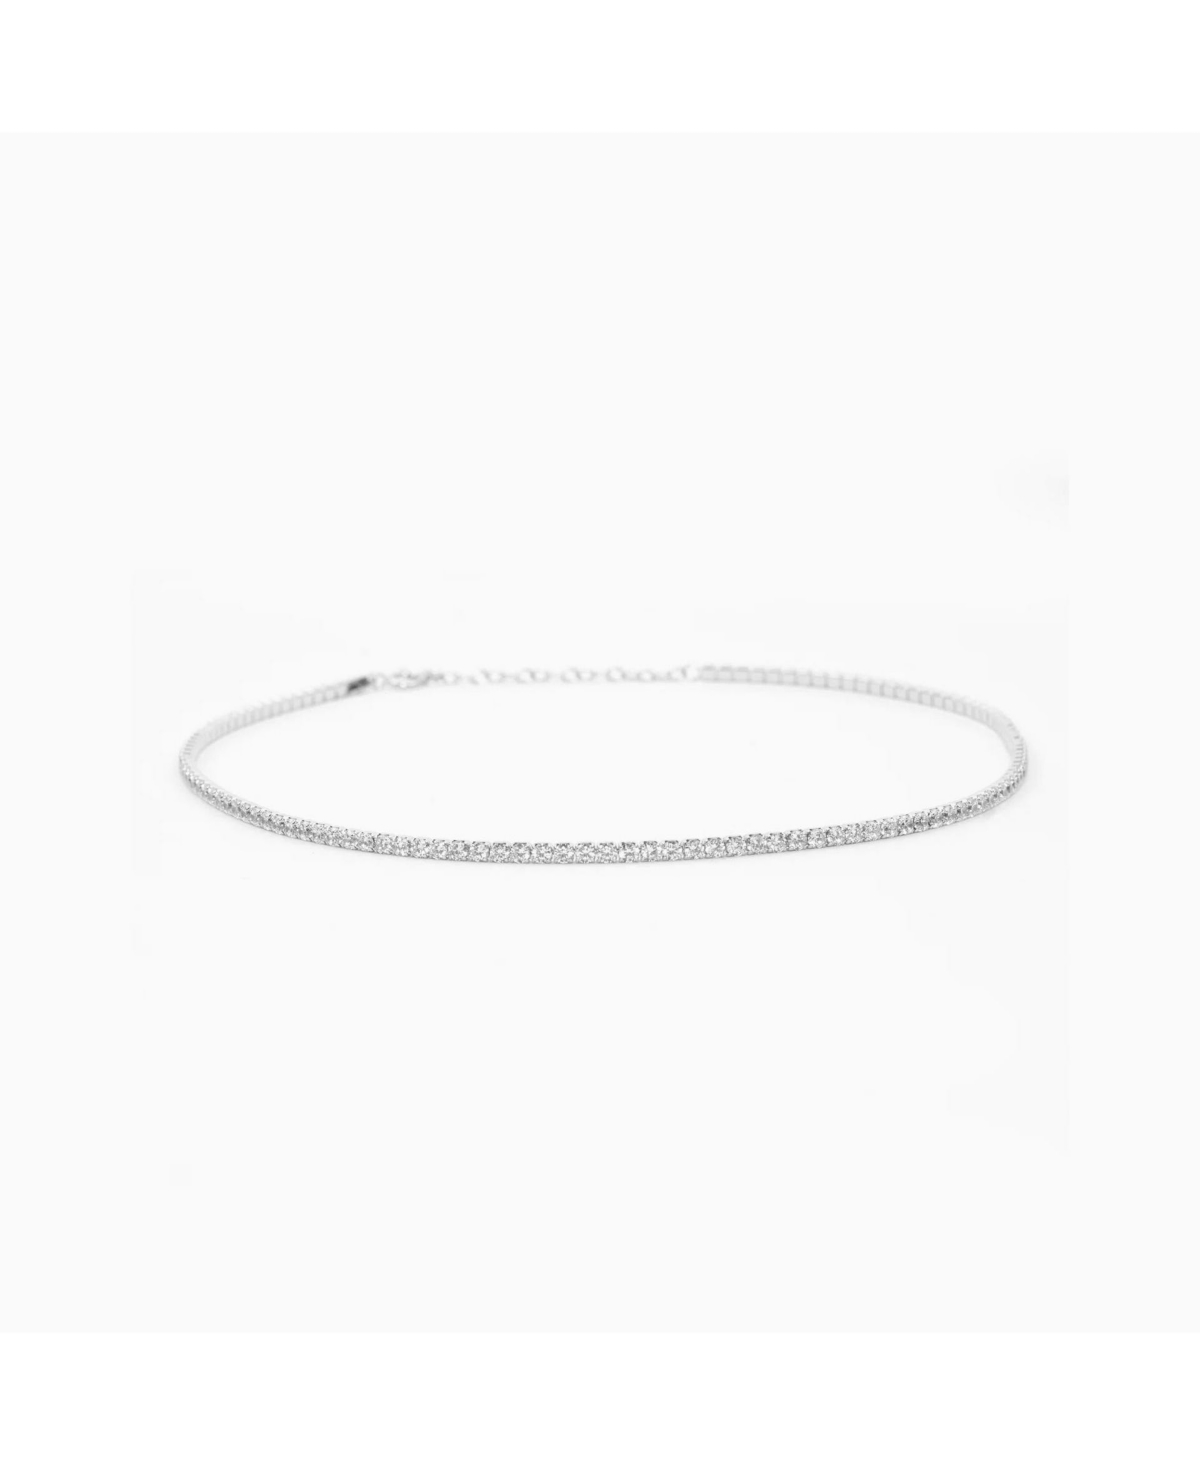 Cherie Tennis Necklace - Silver